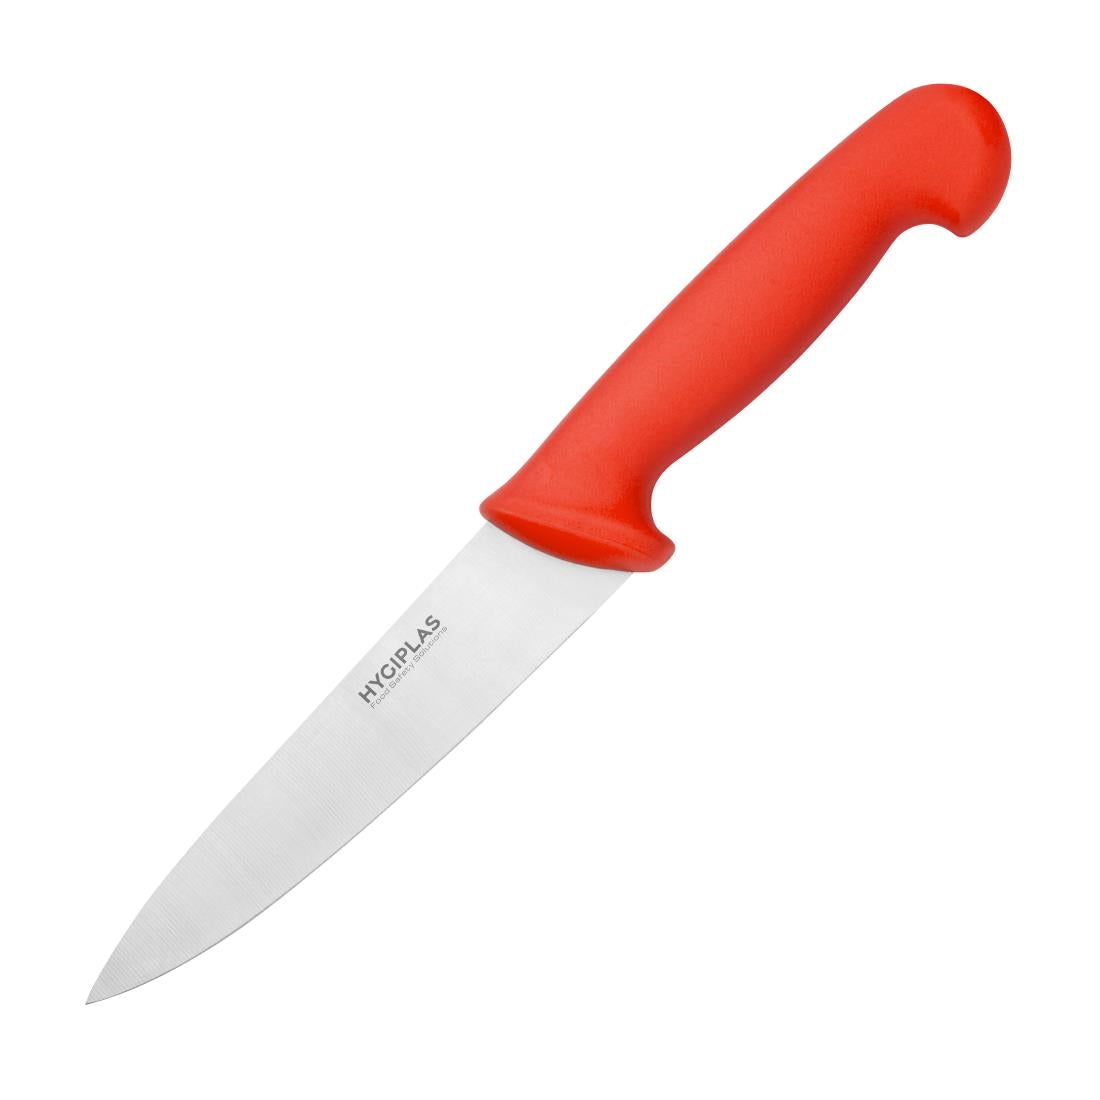 C887 Hygiplas Chefs Knife Red 16cm JD Catering Equipment Solutions Ltd